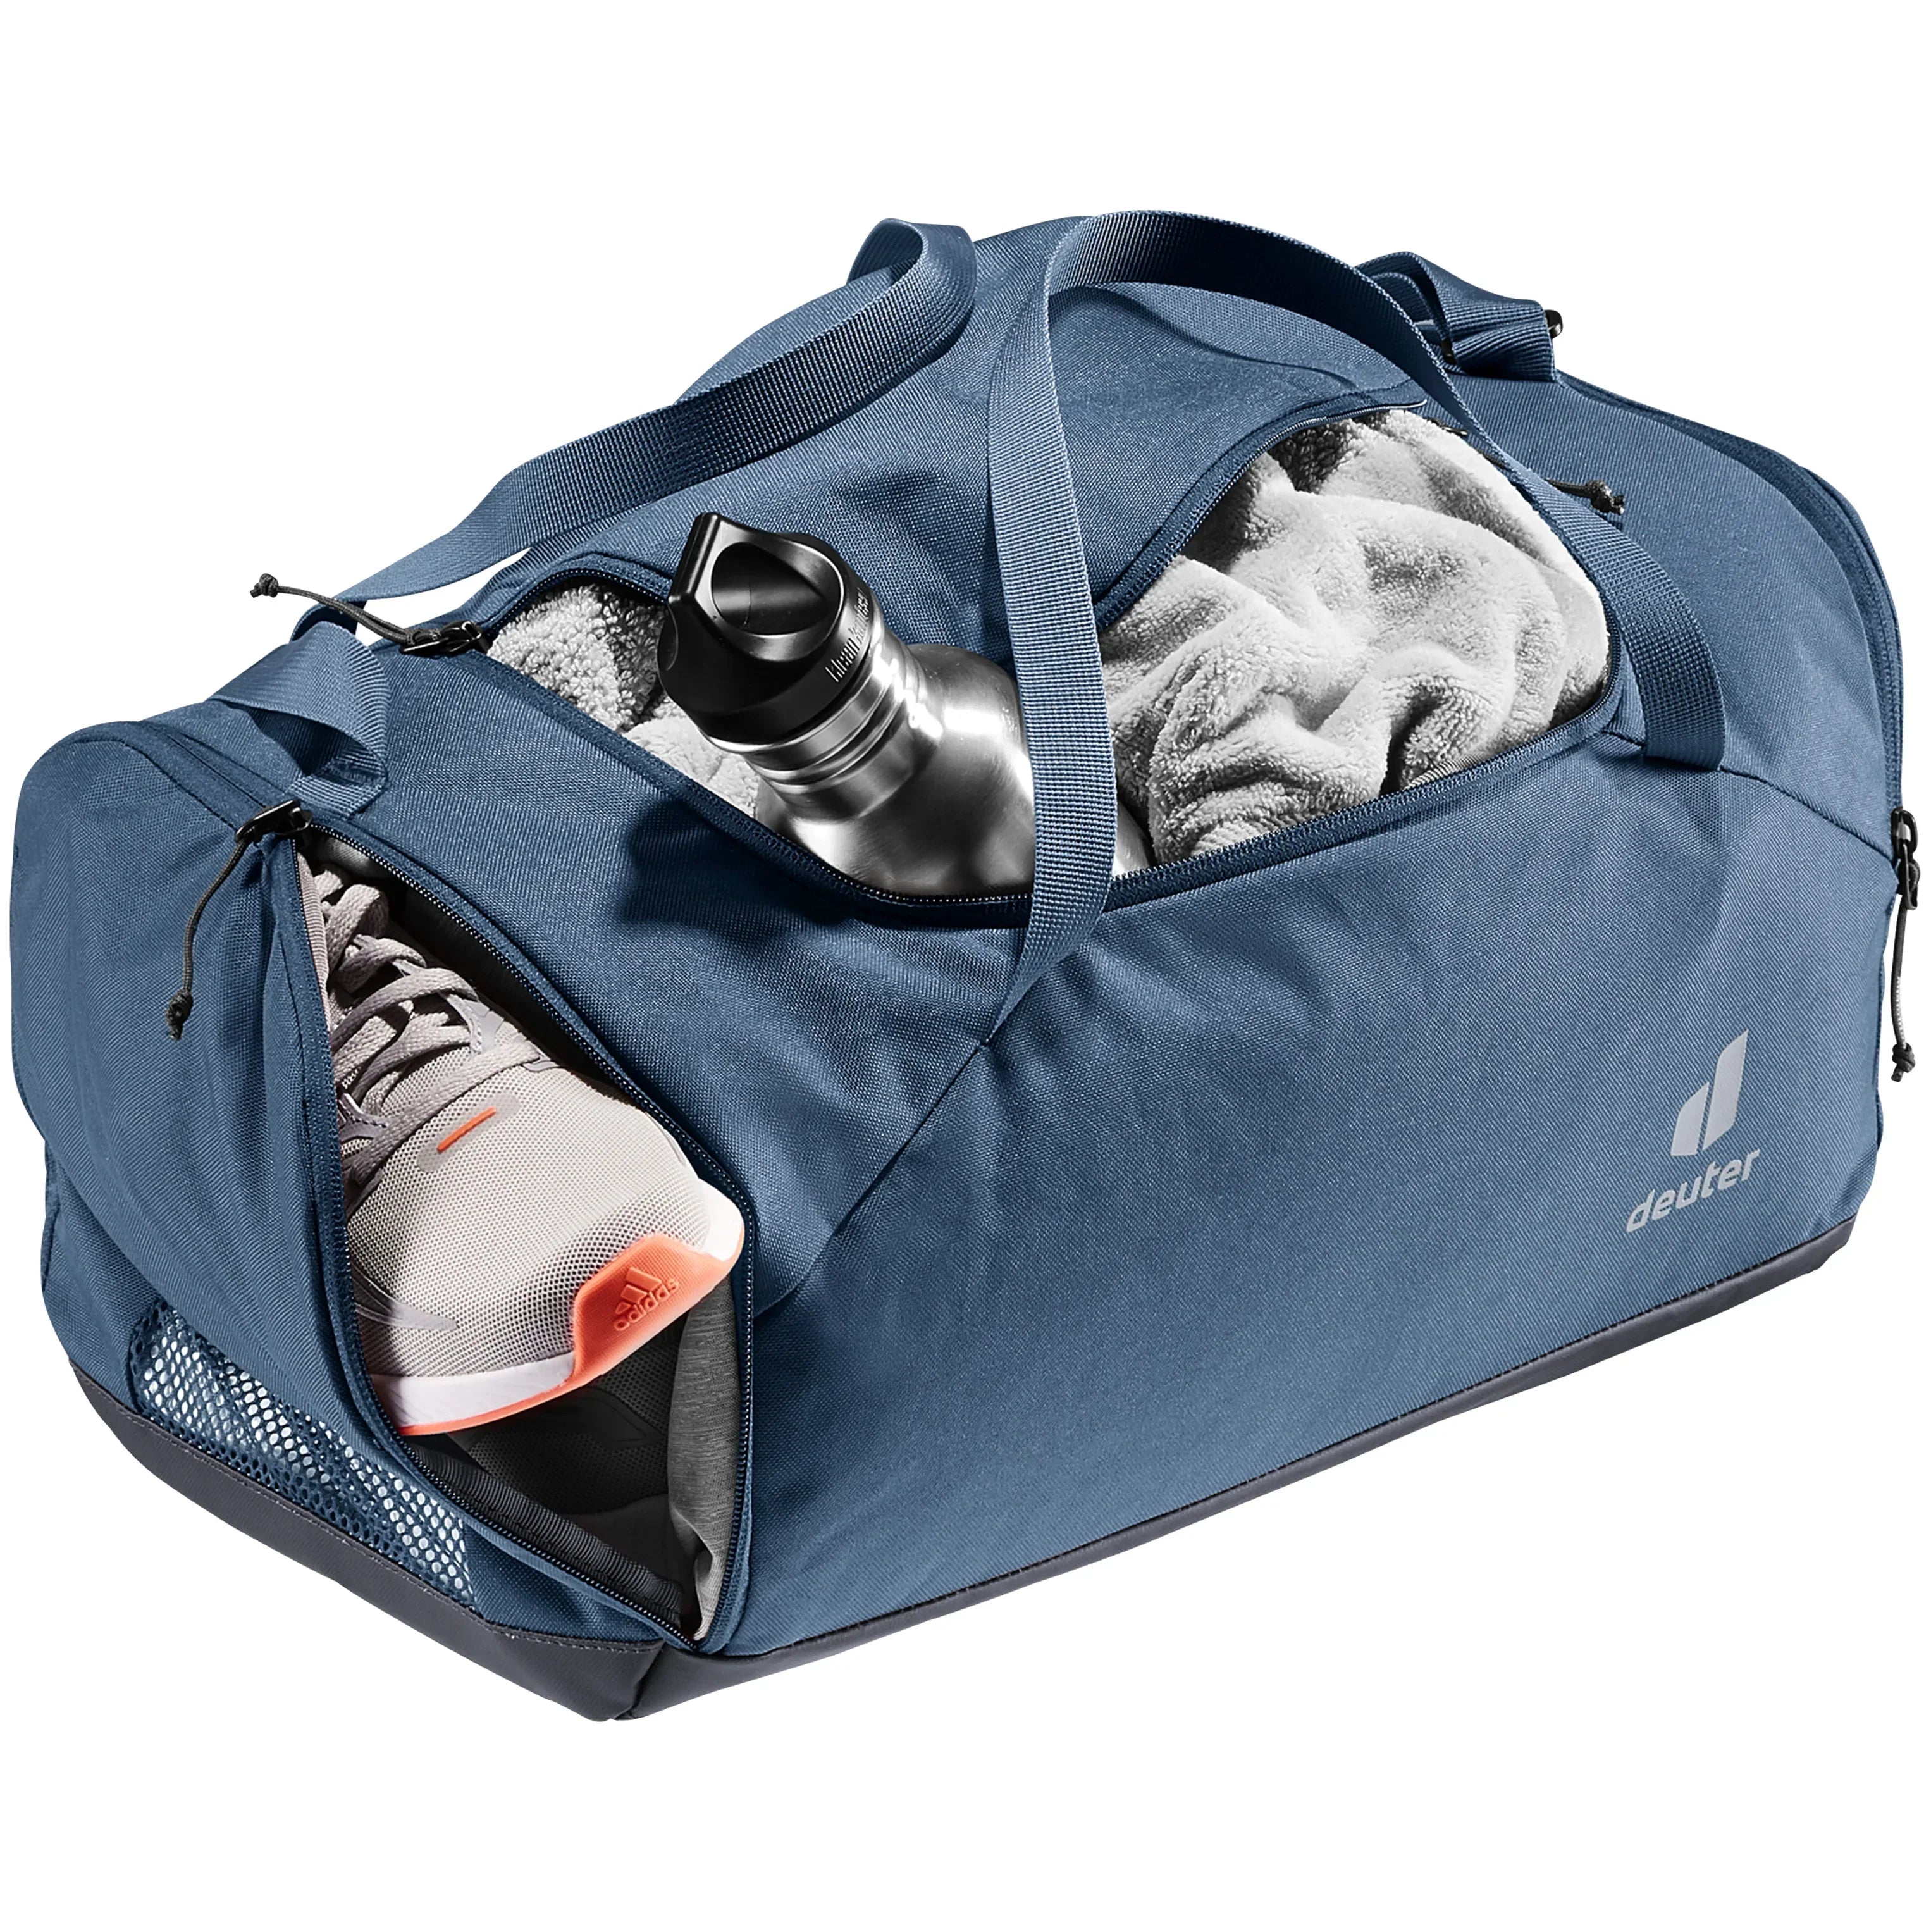 Deuter Daypack Hopper sports bag 48 cm - Raisin Graphite